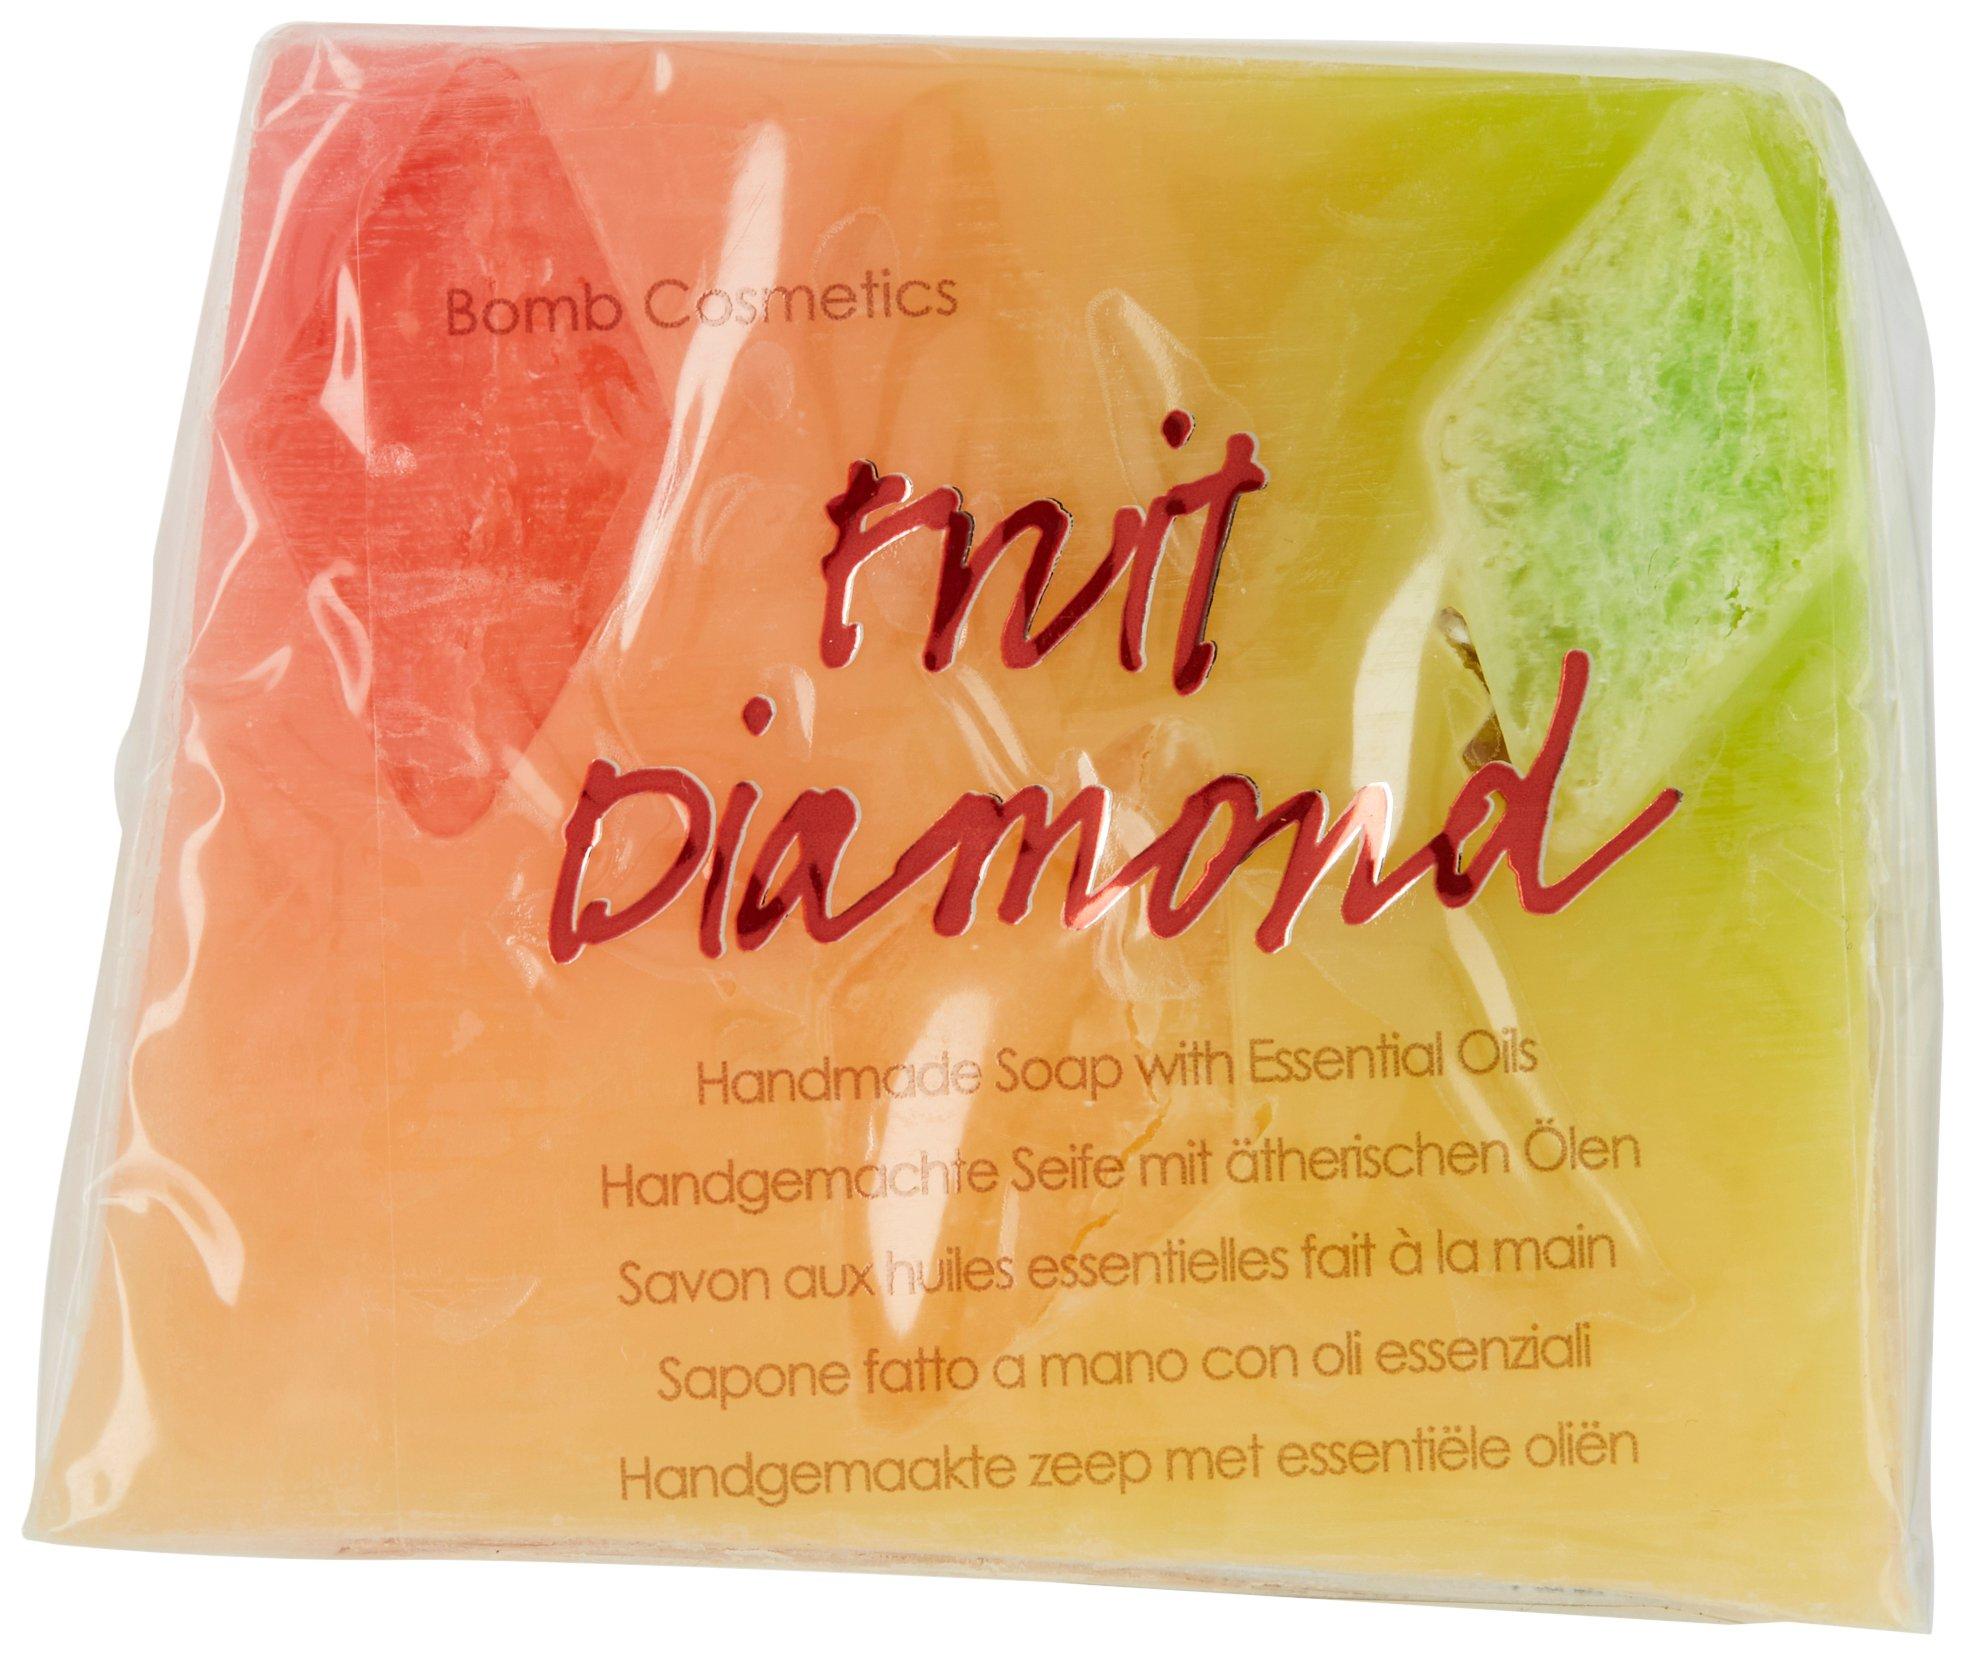 Bomb Cosmetics Fruit Diamond Handmade Soap